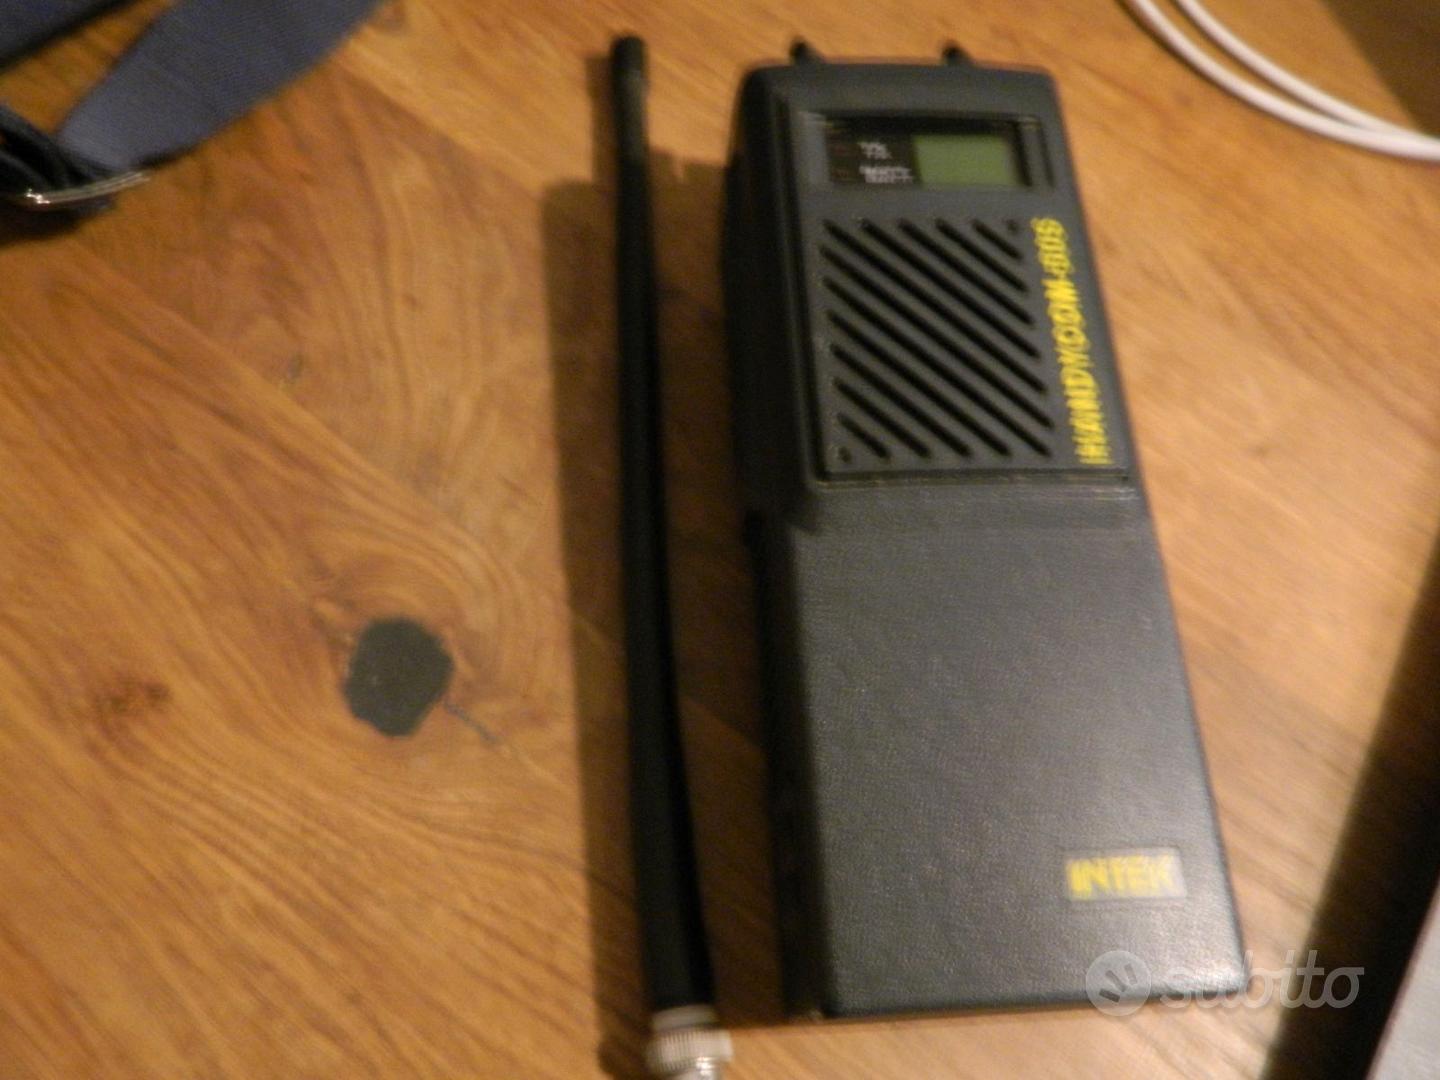 INTEK Handycom-50s CB portatile - Audio/Video In vendita a Fermo